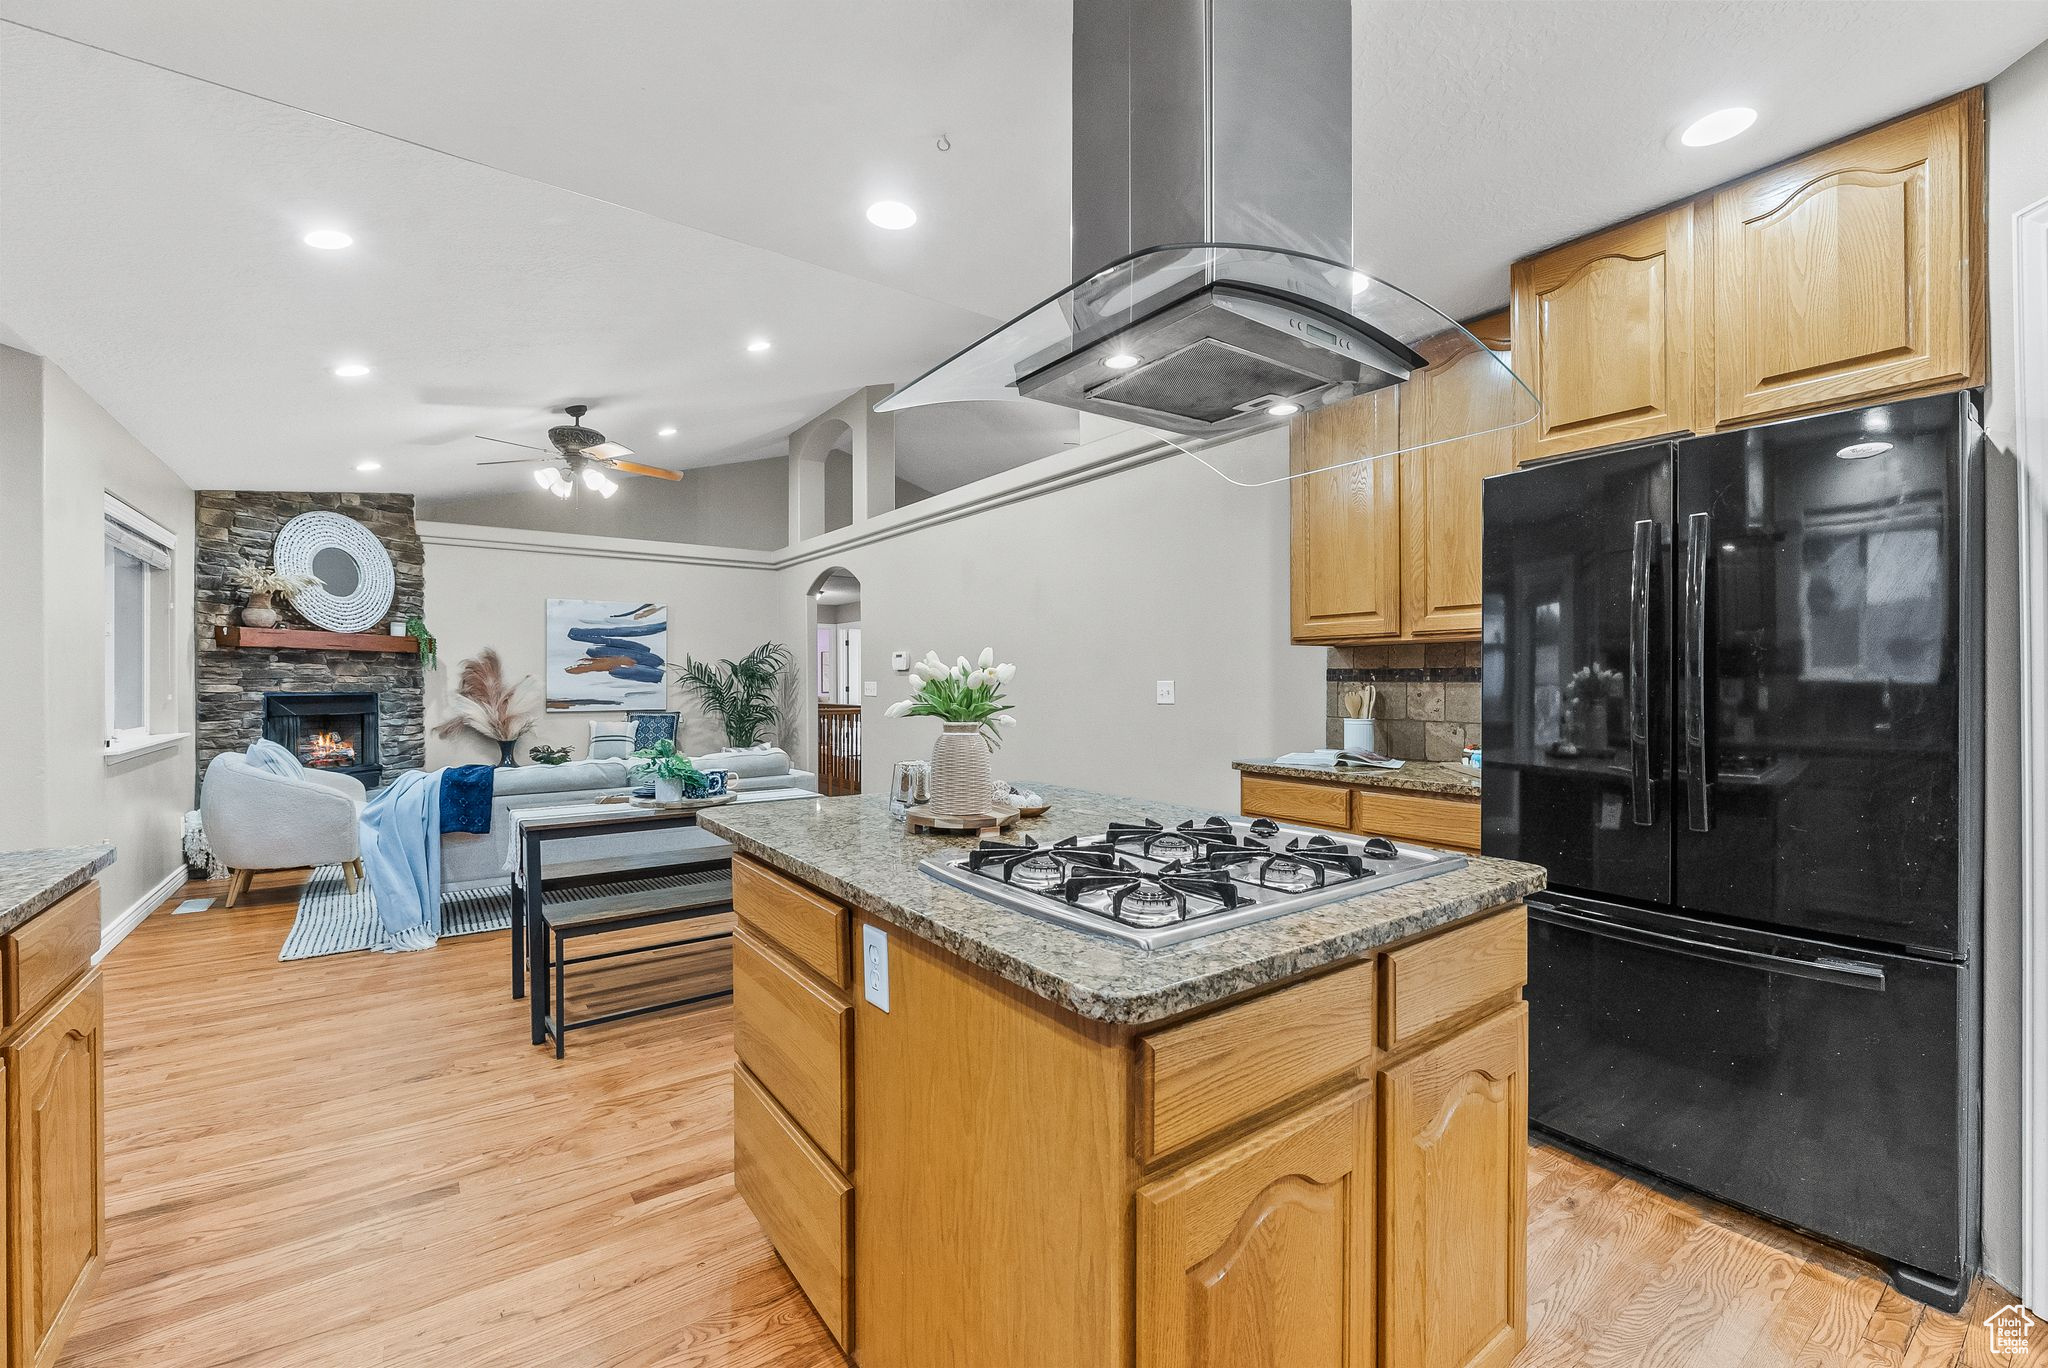 Kitchen featuring a center island, black fridge, light hardwood / wood-style flooring, island range hood, and ceiling fan